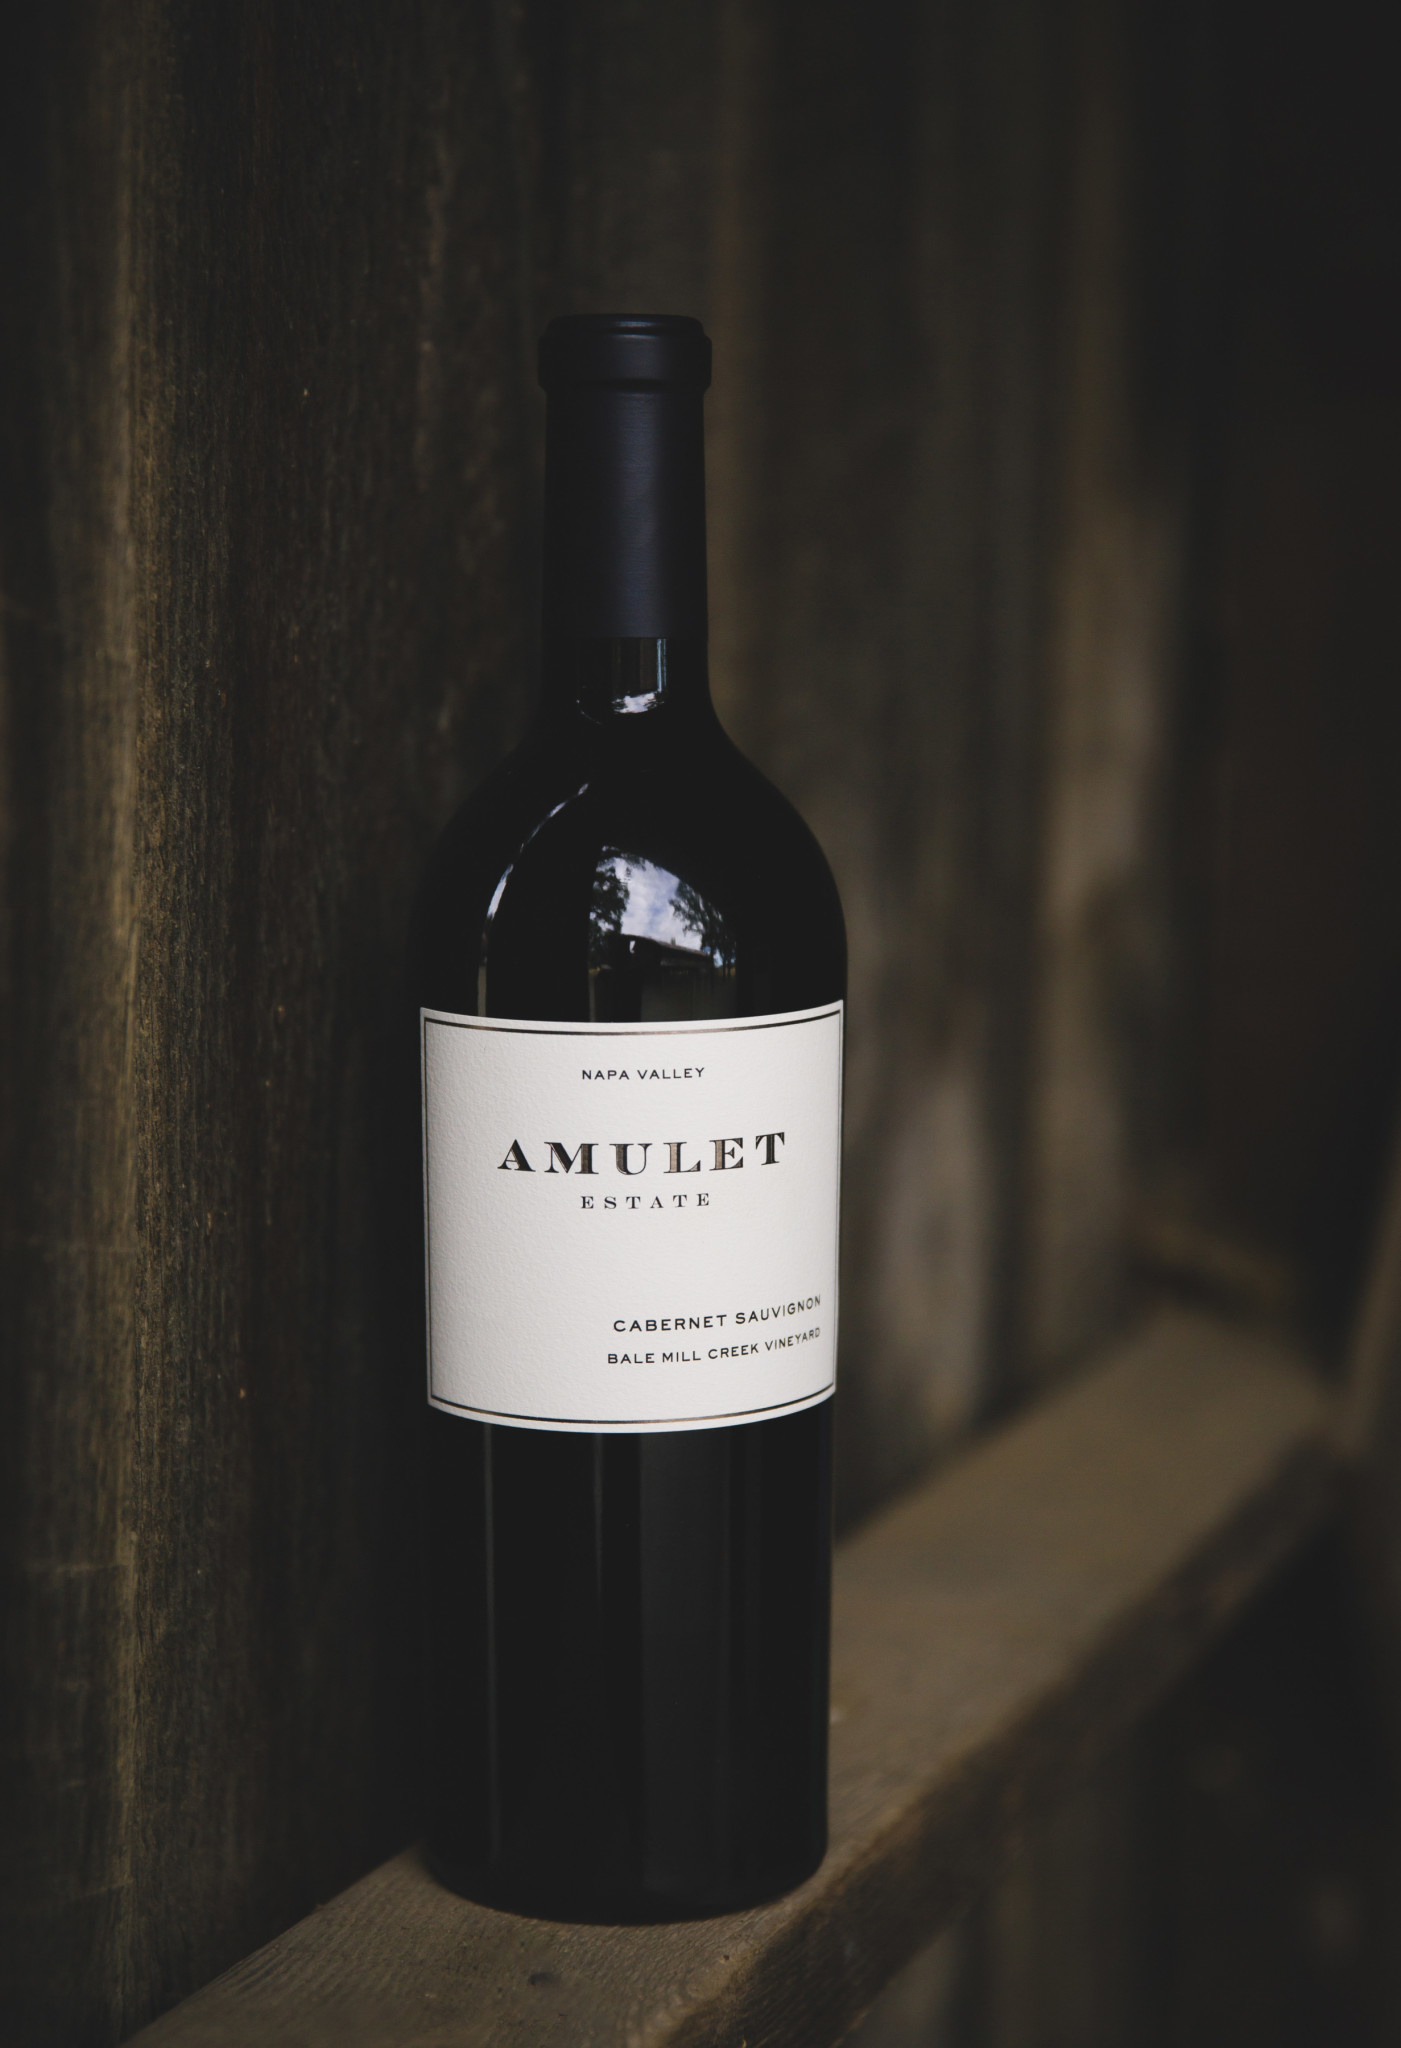 Amulet Estate "Bale Mill Creek Vineyard" Cabernet Sauvignon 2019 - 750ml